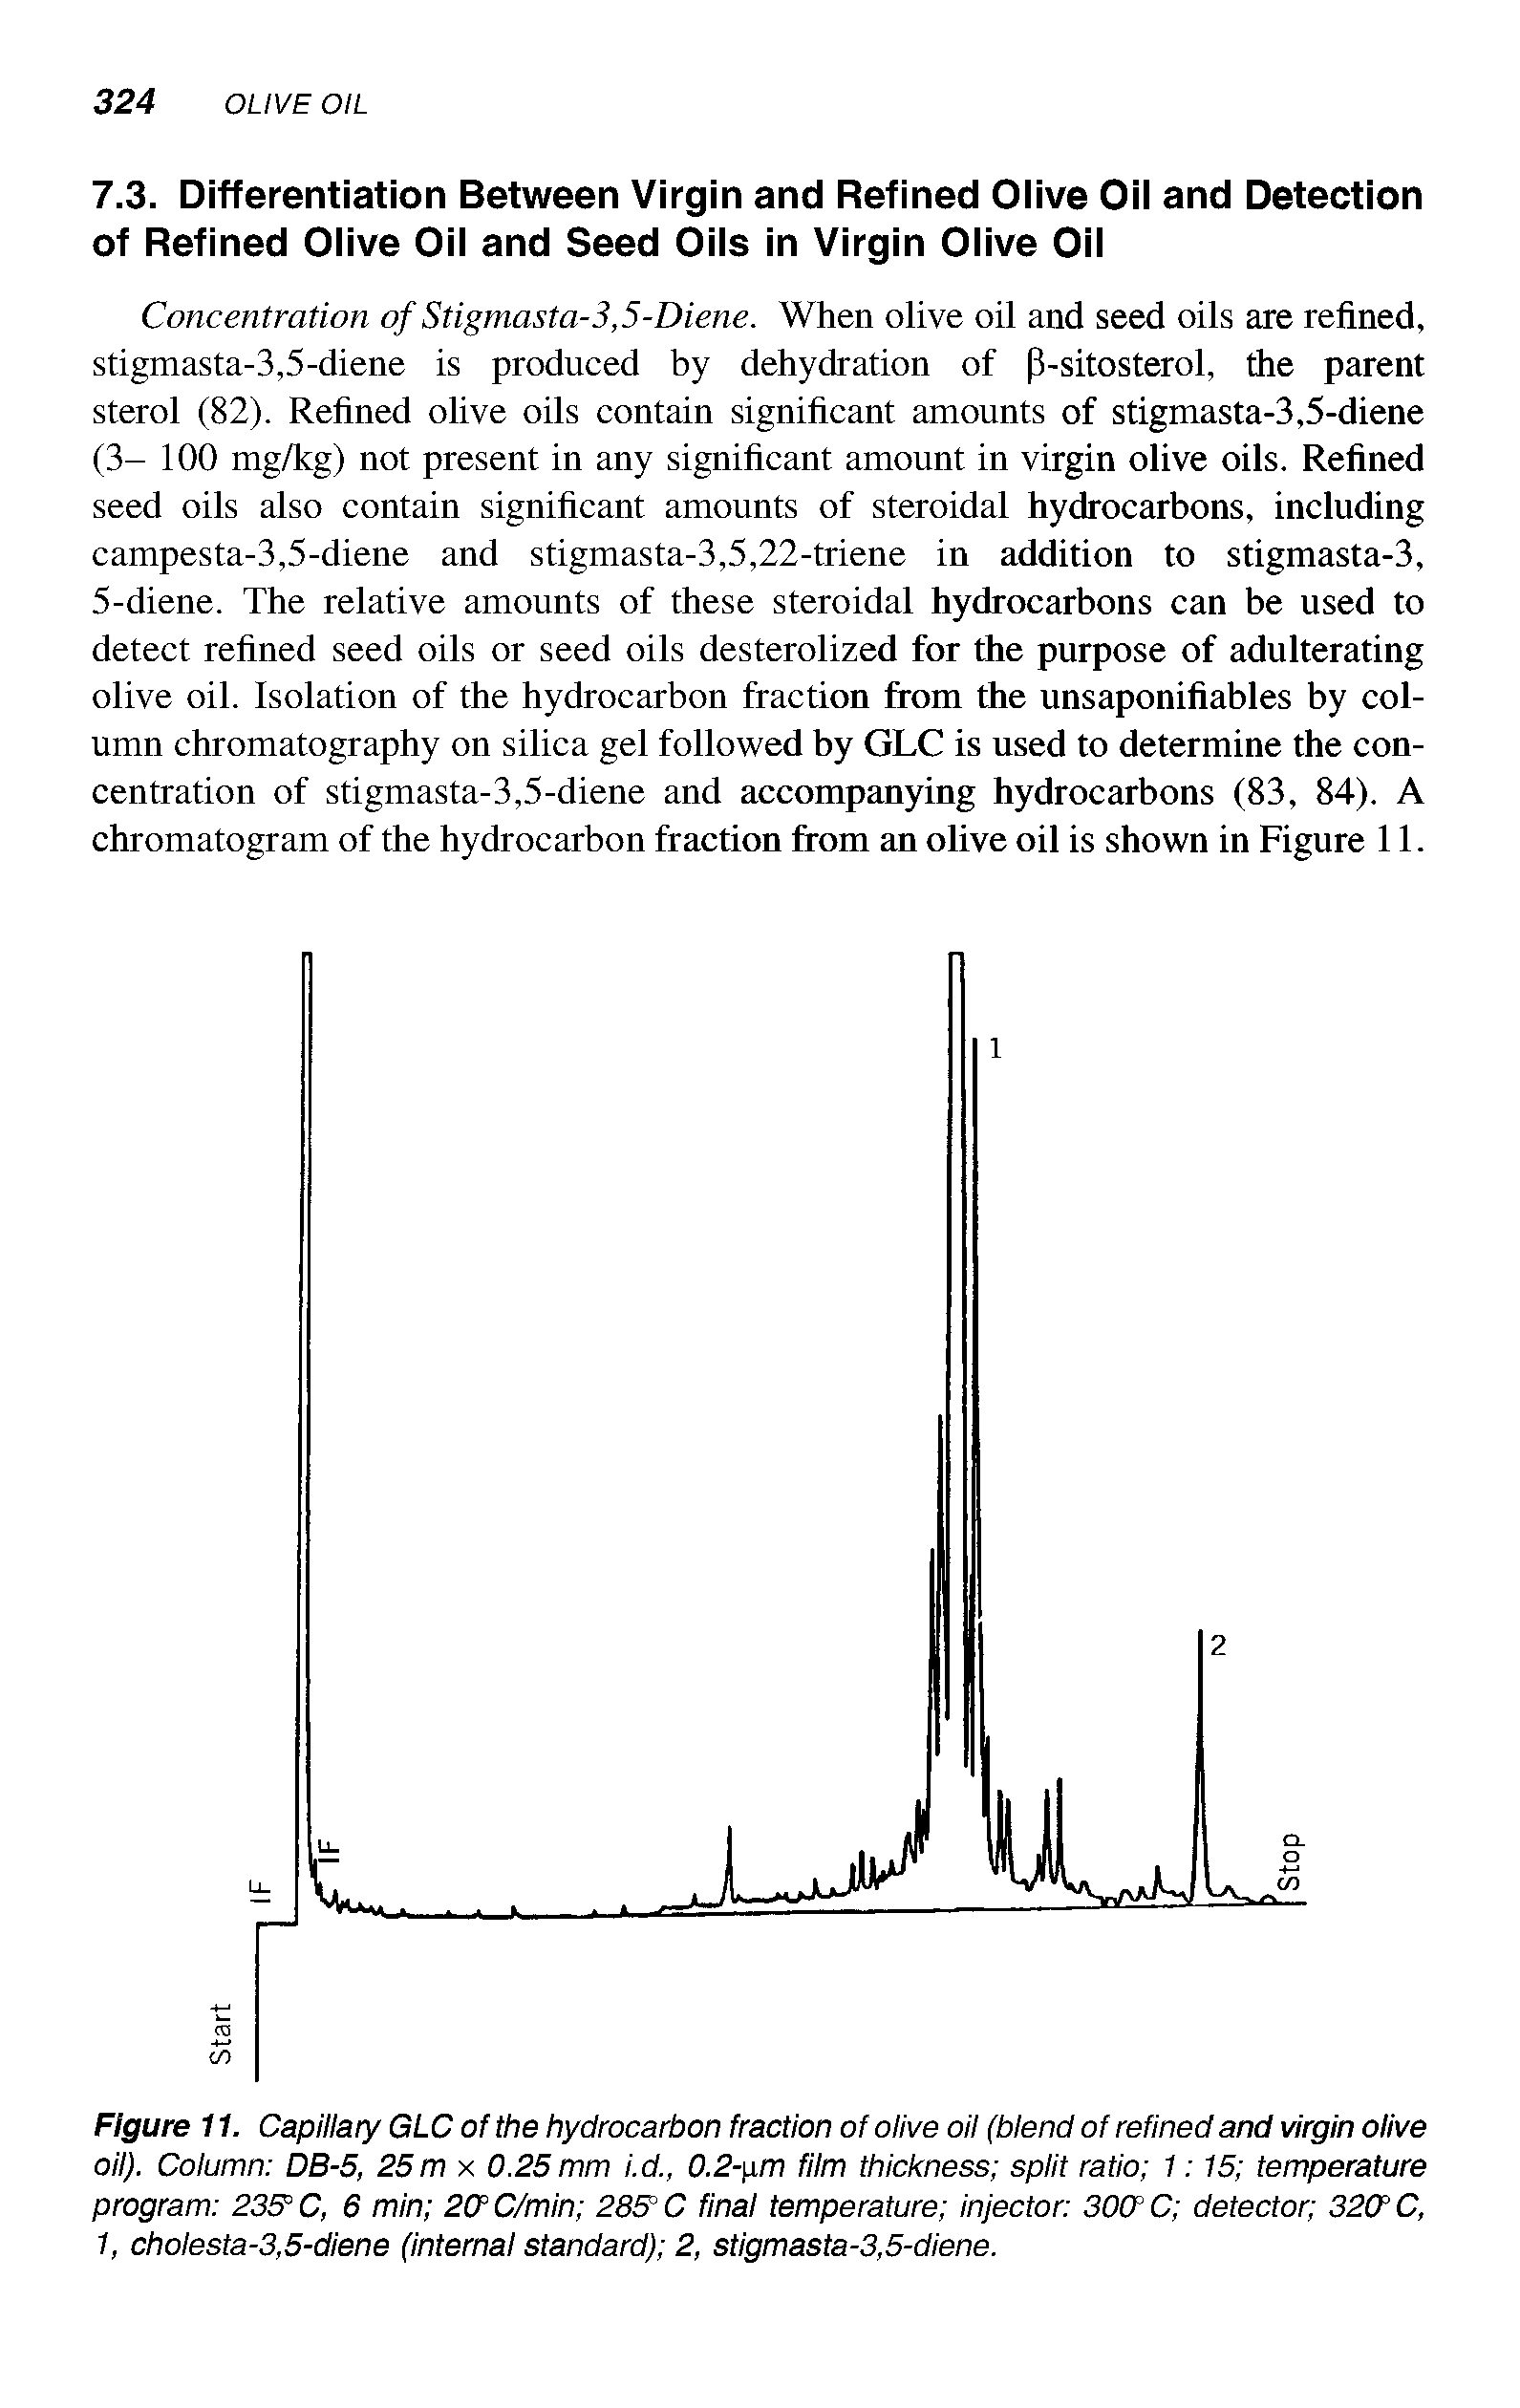 Figure 11. Capillary GLC of the hydrocarbon fraction of olive oil (blend of refined and virgin olive oil). Column DBS, 25 m x 0.25 mm i.d., 0.2- im film thickness split ratio 1 15 temperature program 233 C, 6 min 2(y C/min 28S C final temperature injector 30O C detector 320" C, 1, cholesta-3,5-diene (internal standard) 2, stigmasta-3,5-diene.